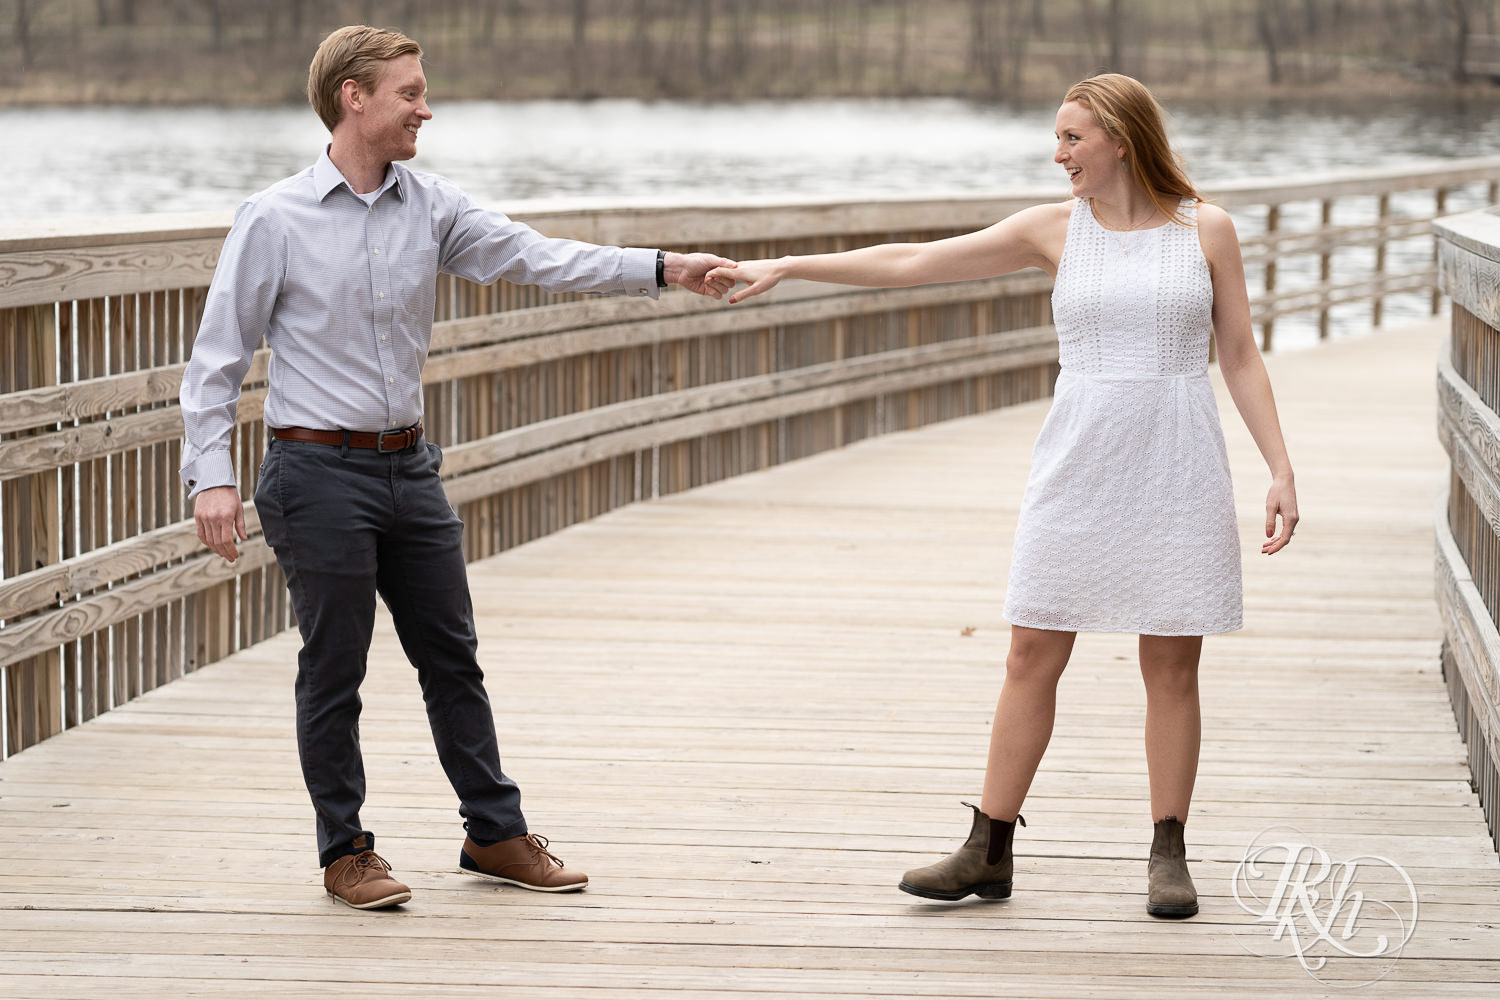 Man and woman dance on bridge on cloudy day in Eagan, Minnesota.